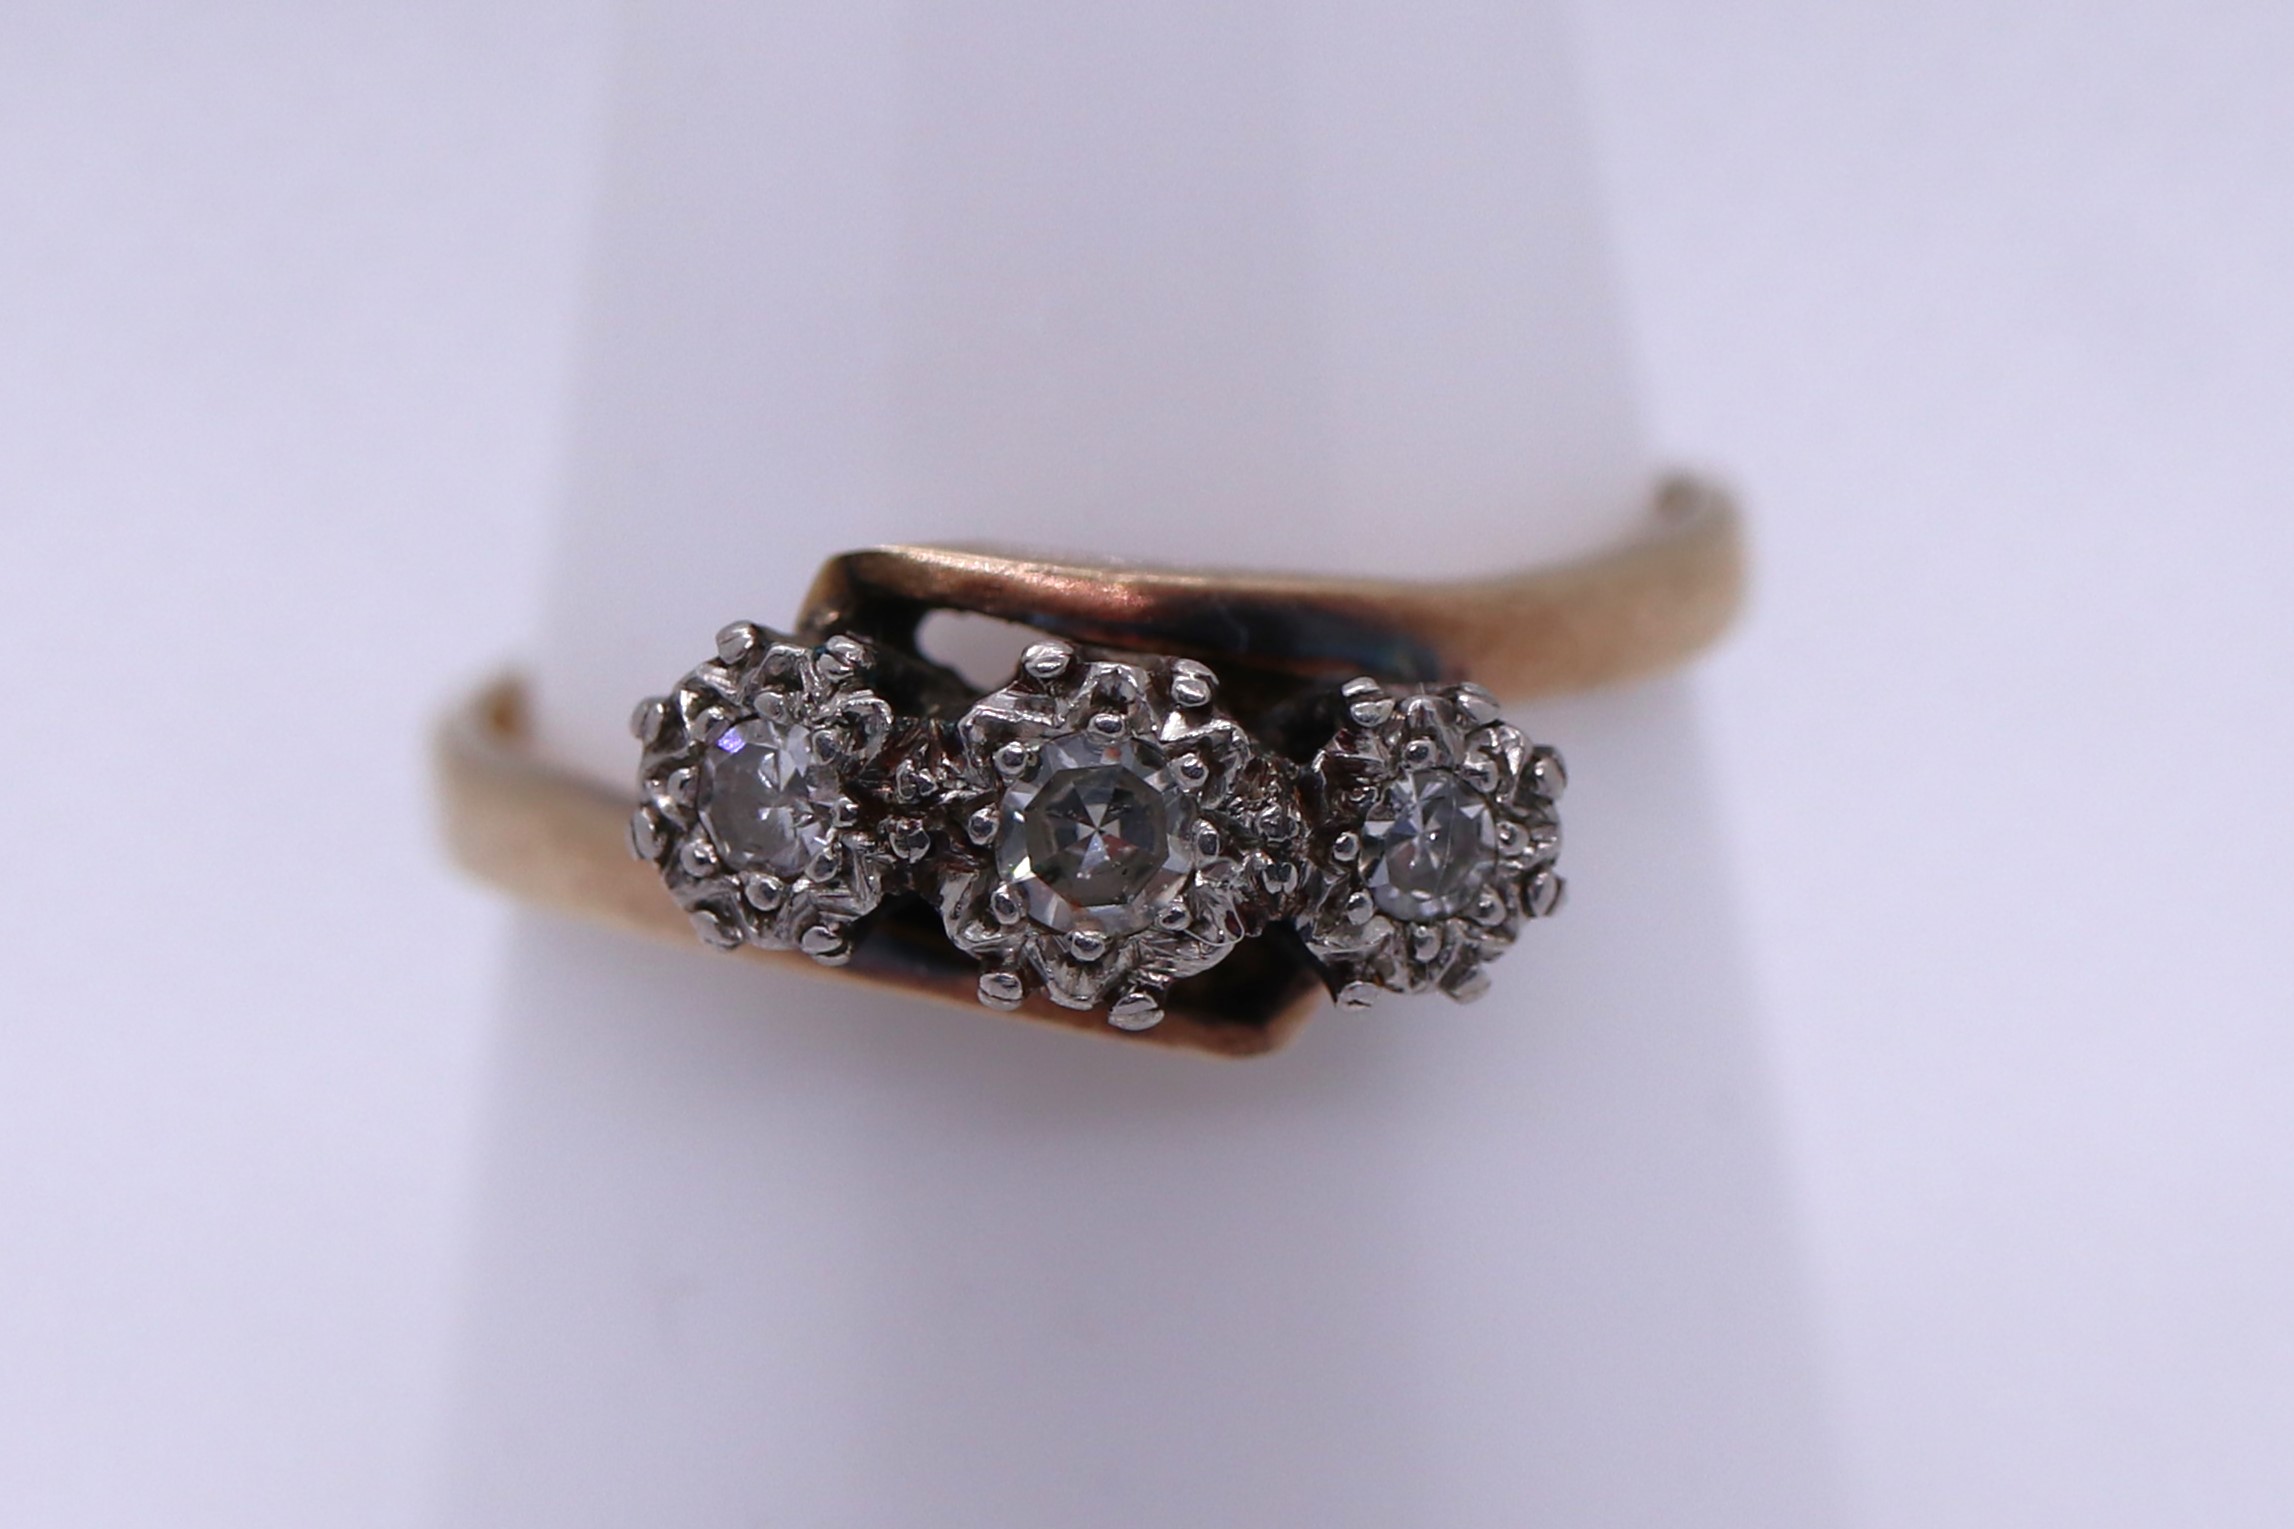 9ct gold 3 stone diamond ring - Size P - Image 3 of 3